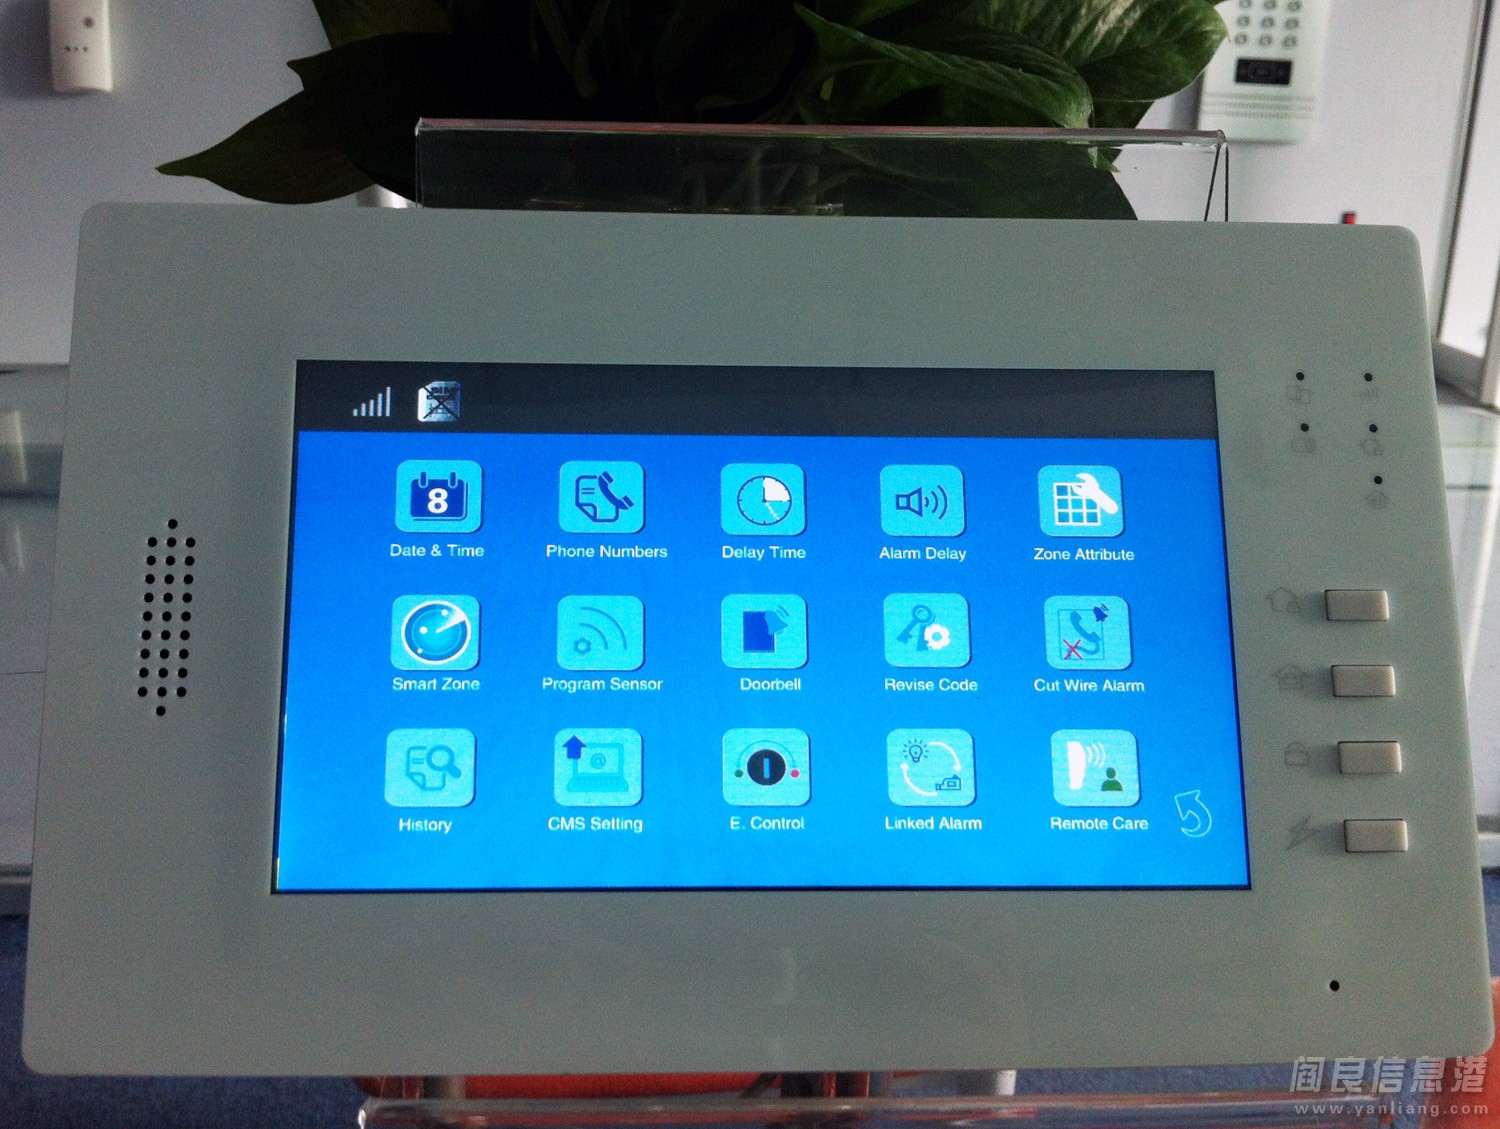 X6 7inch touch screen alarm host.jpg